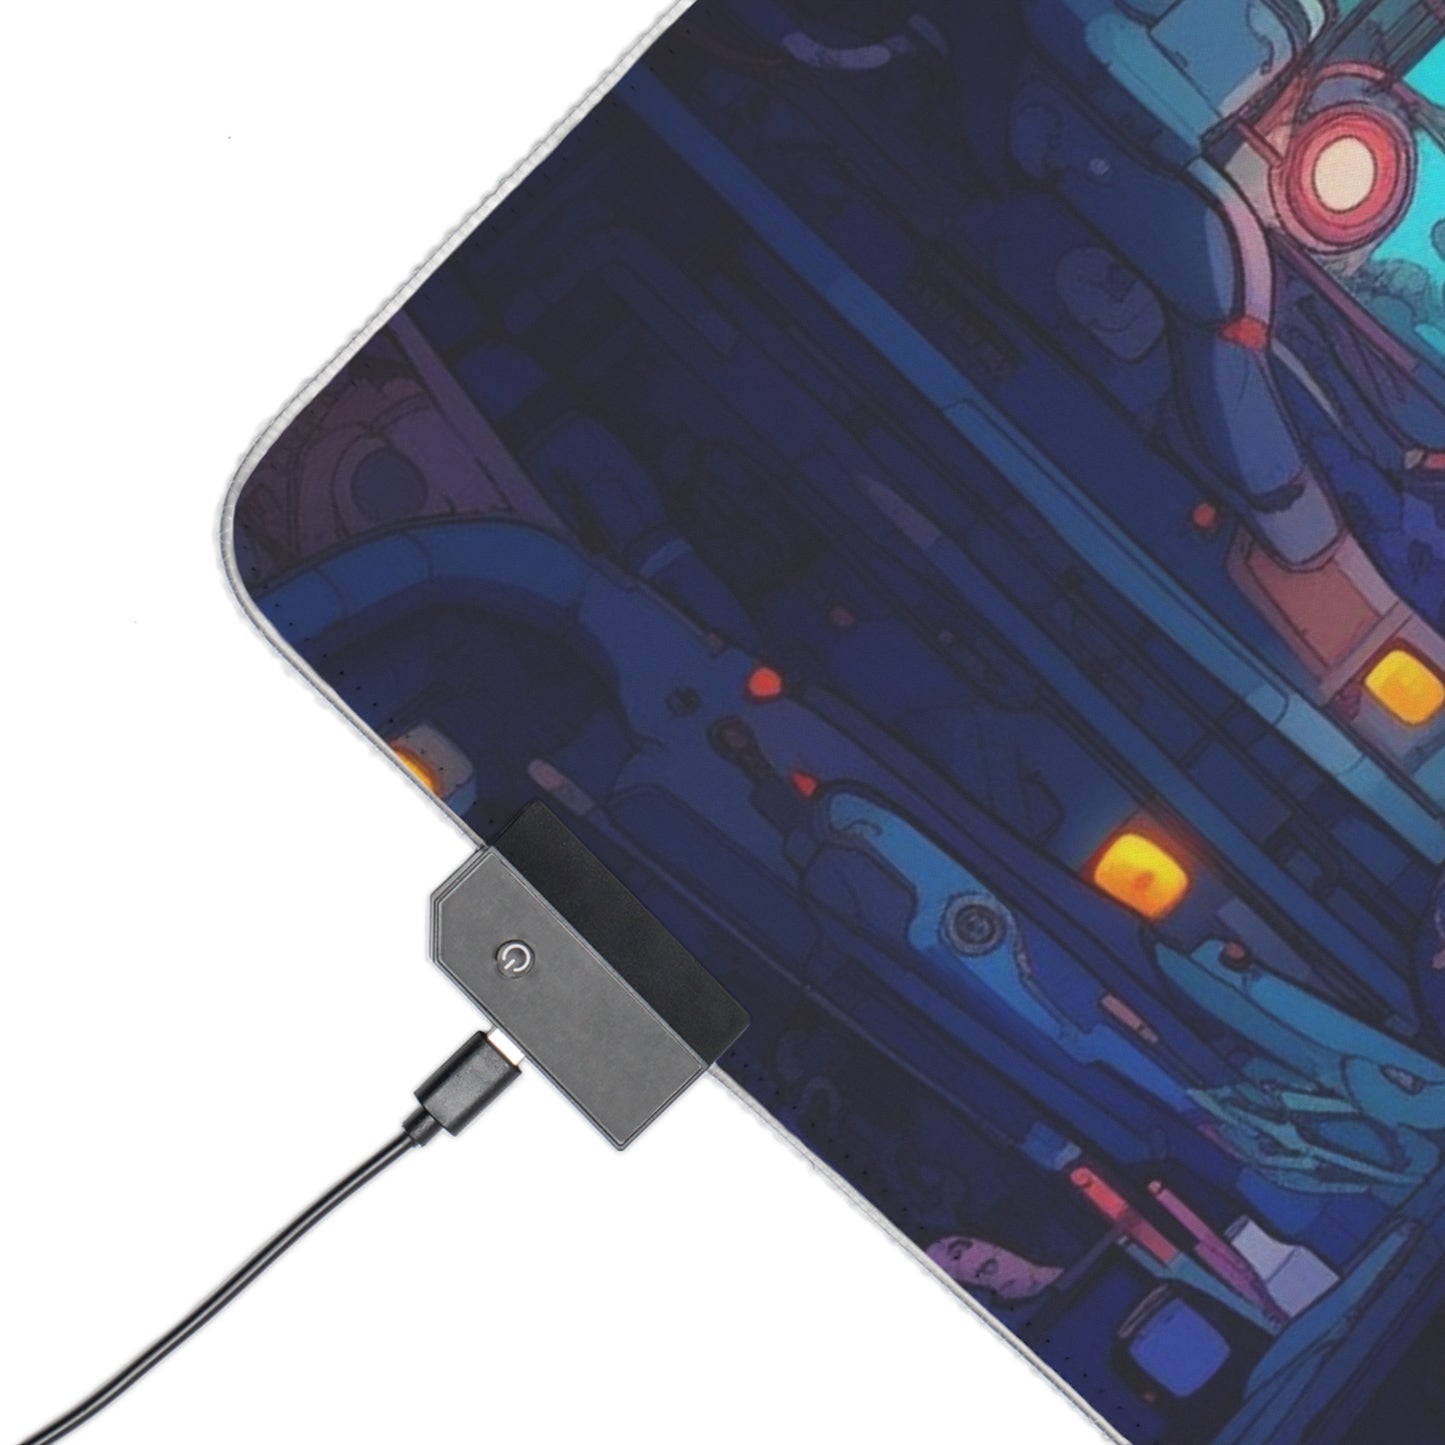 Aquatic Haven-3 LED Gaming Mouse Pad